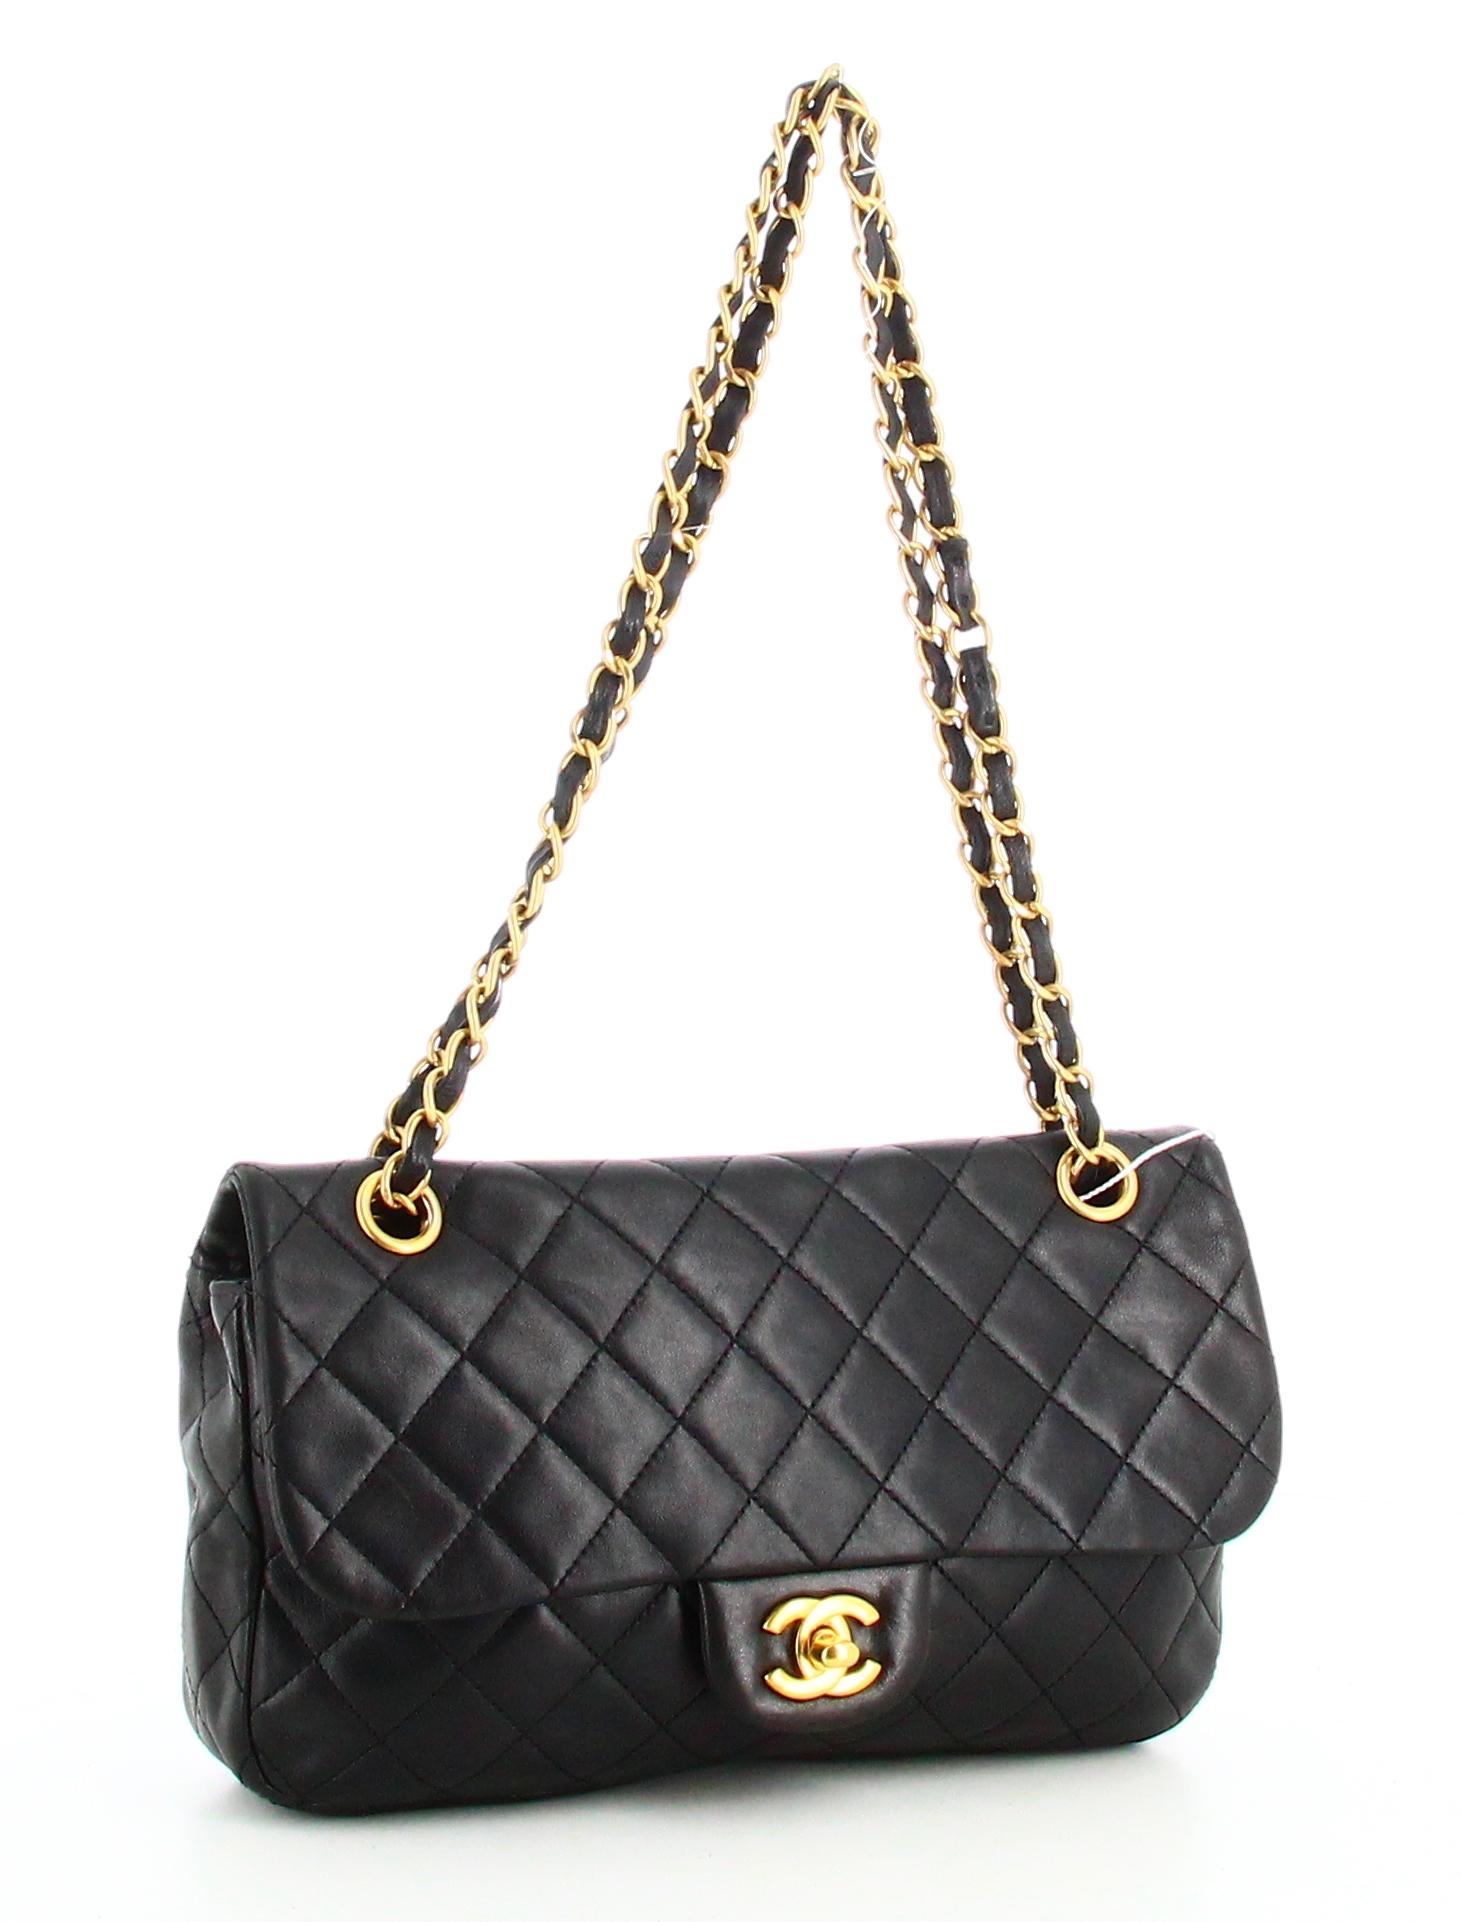 2010 Chanel Medium Classic Lambskin Single Flap Handbag In Good Condition For Sale In PARIS, FR